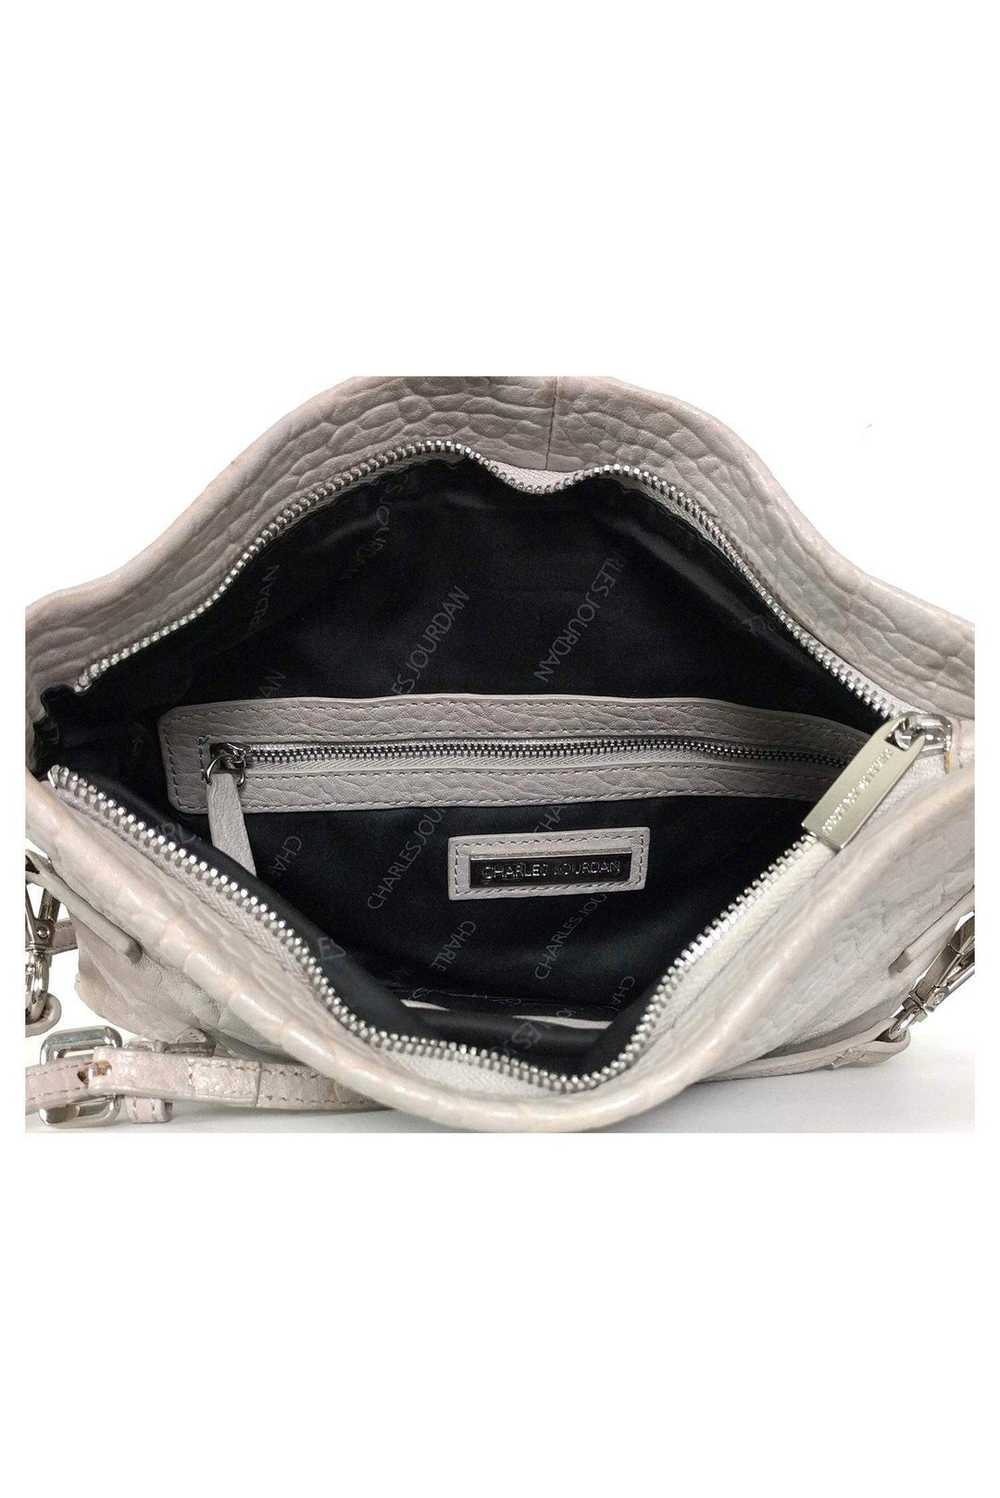 Charles Jourdan - Grey Leather Crossbody Bag - image 5